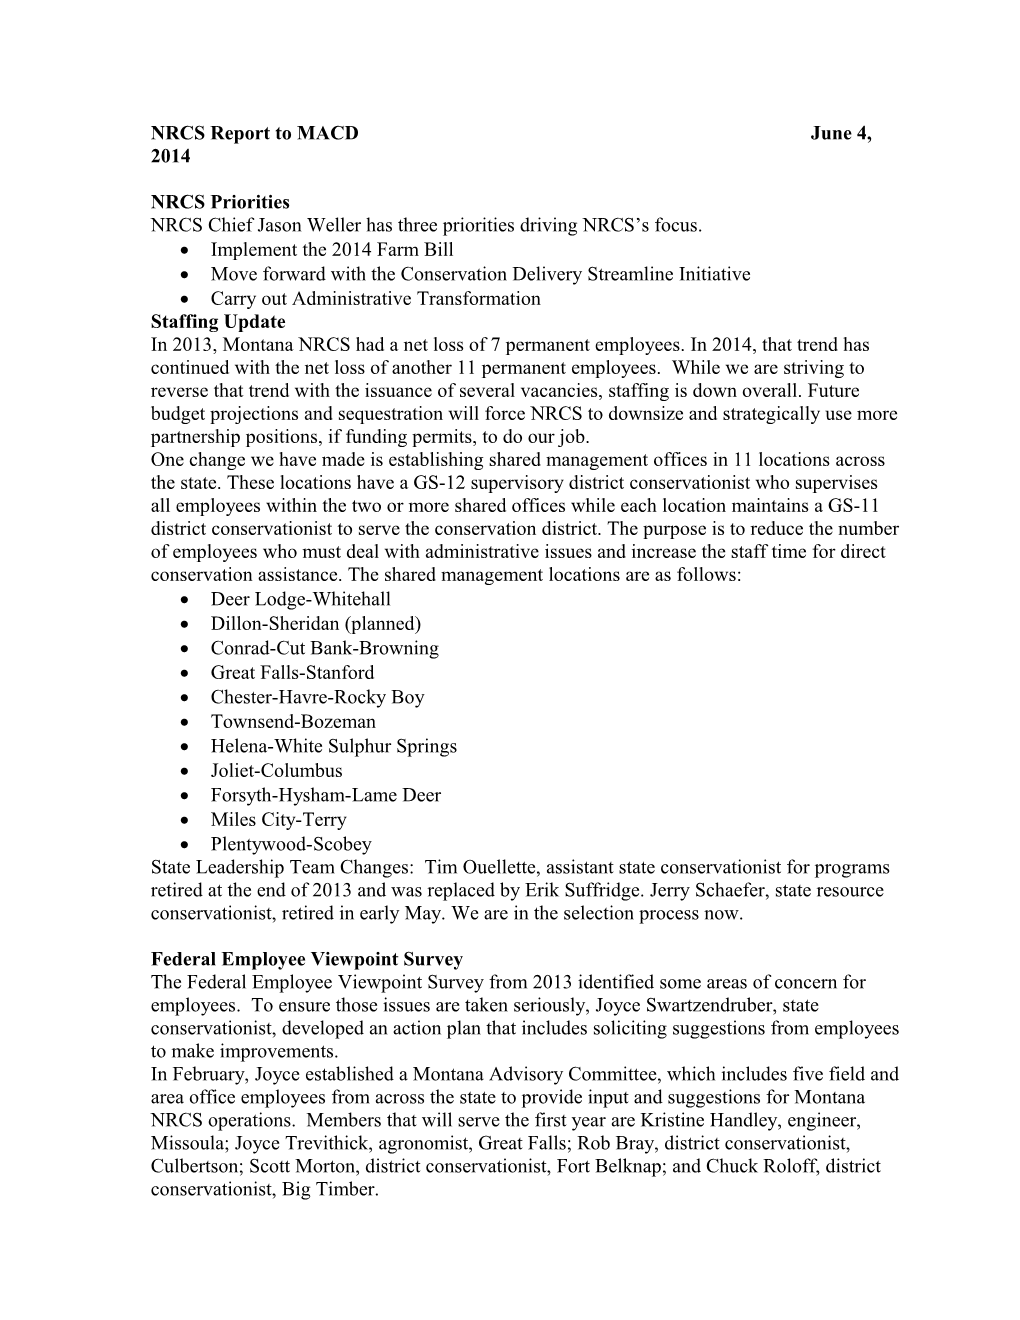 NRCS Report to MACD June 4, 2014